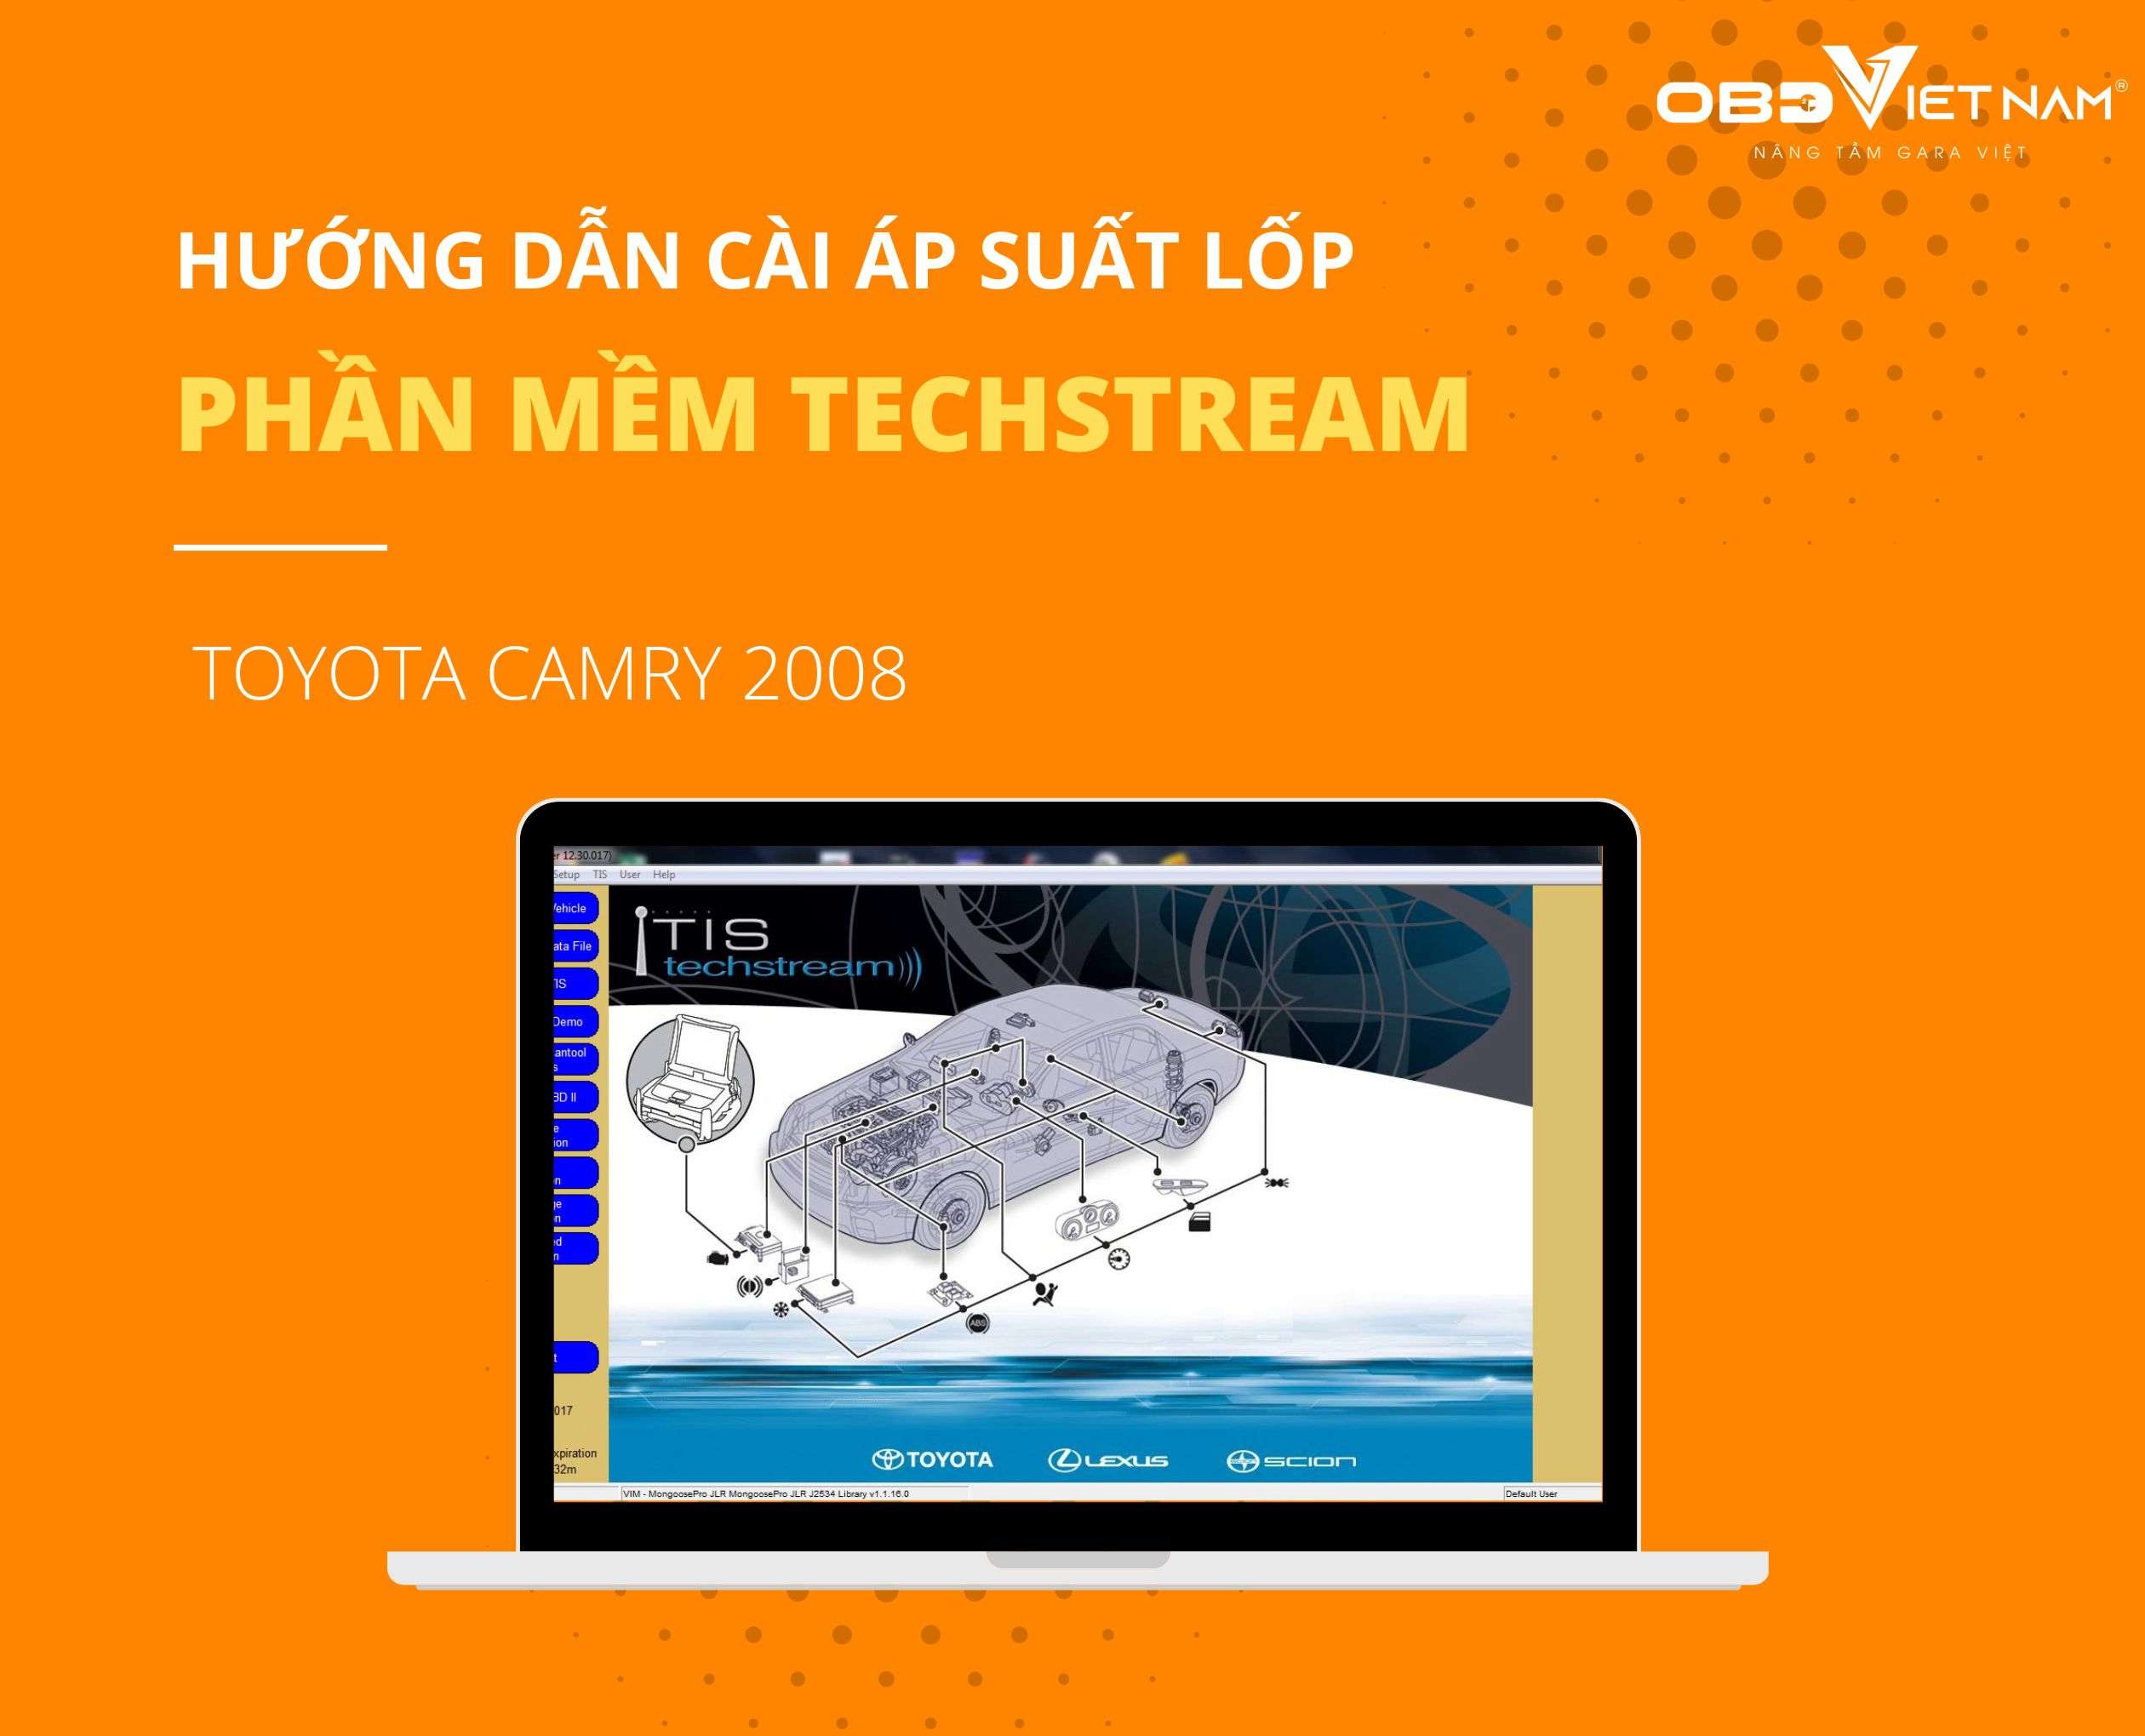 huong-dan cai-ap-suat-lop-tren-dong-xe-toyota-camry-2008-bang-phan-mem-techstream-obdvietnam (1)